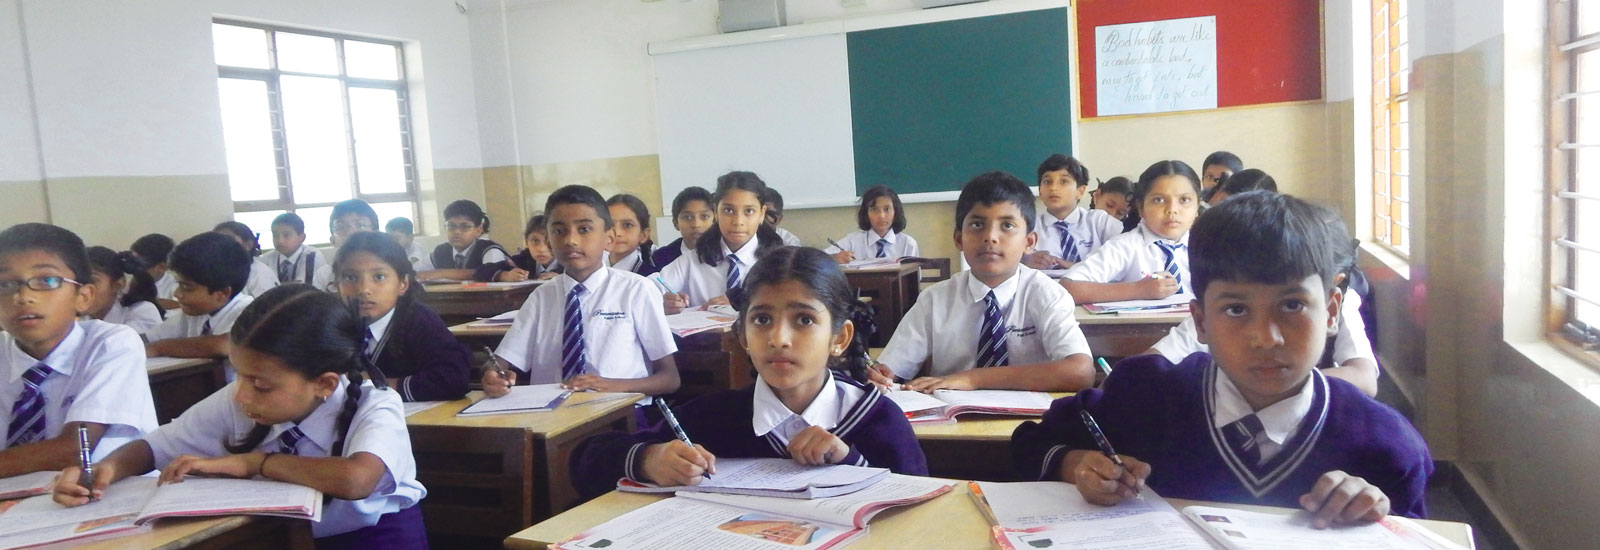 presentation public school mysore